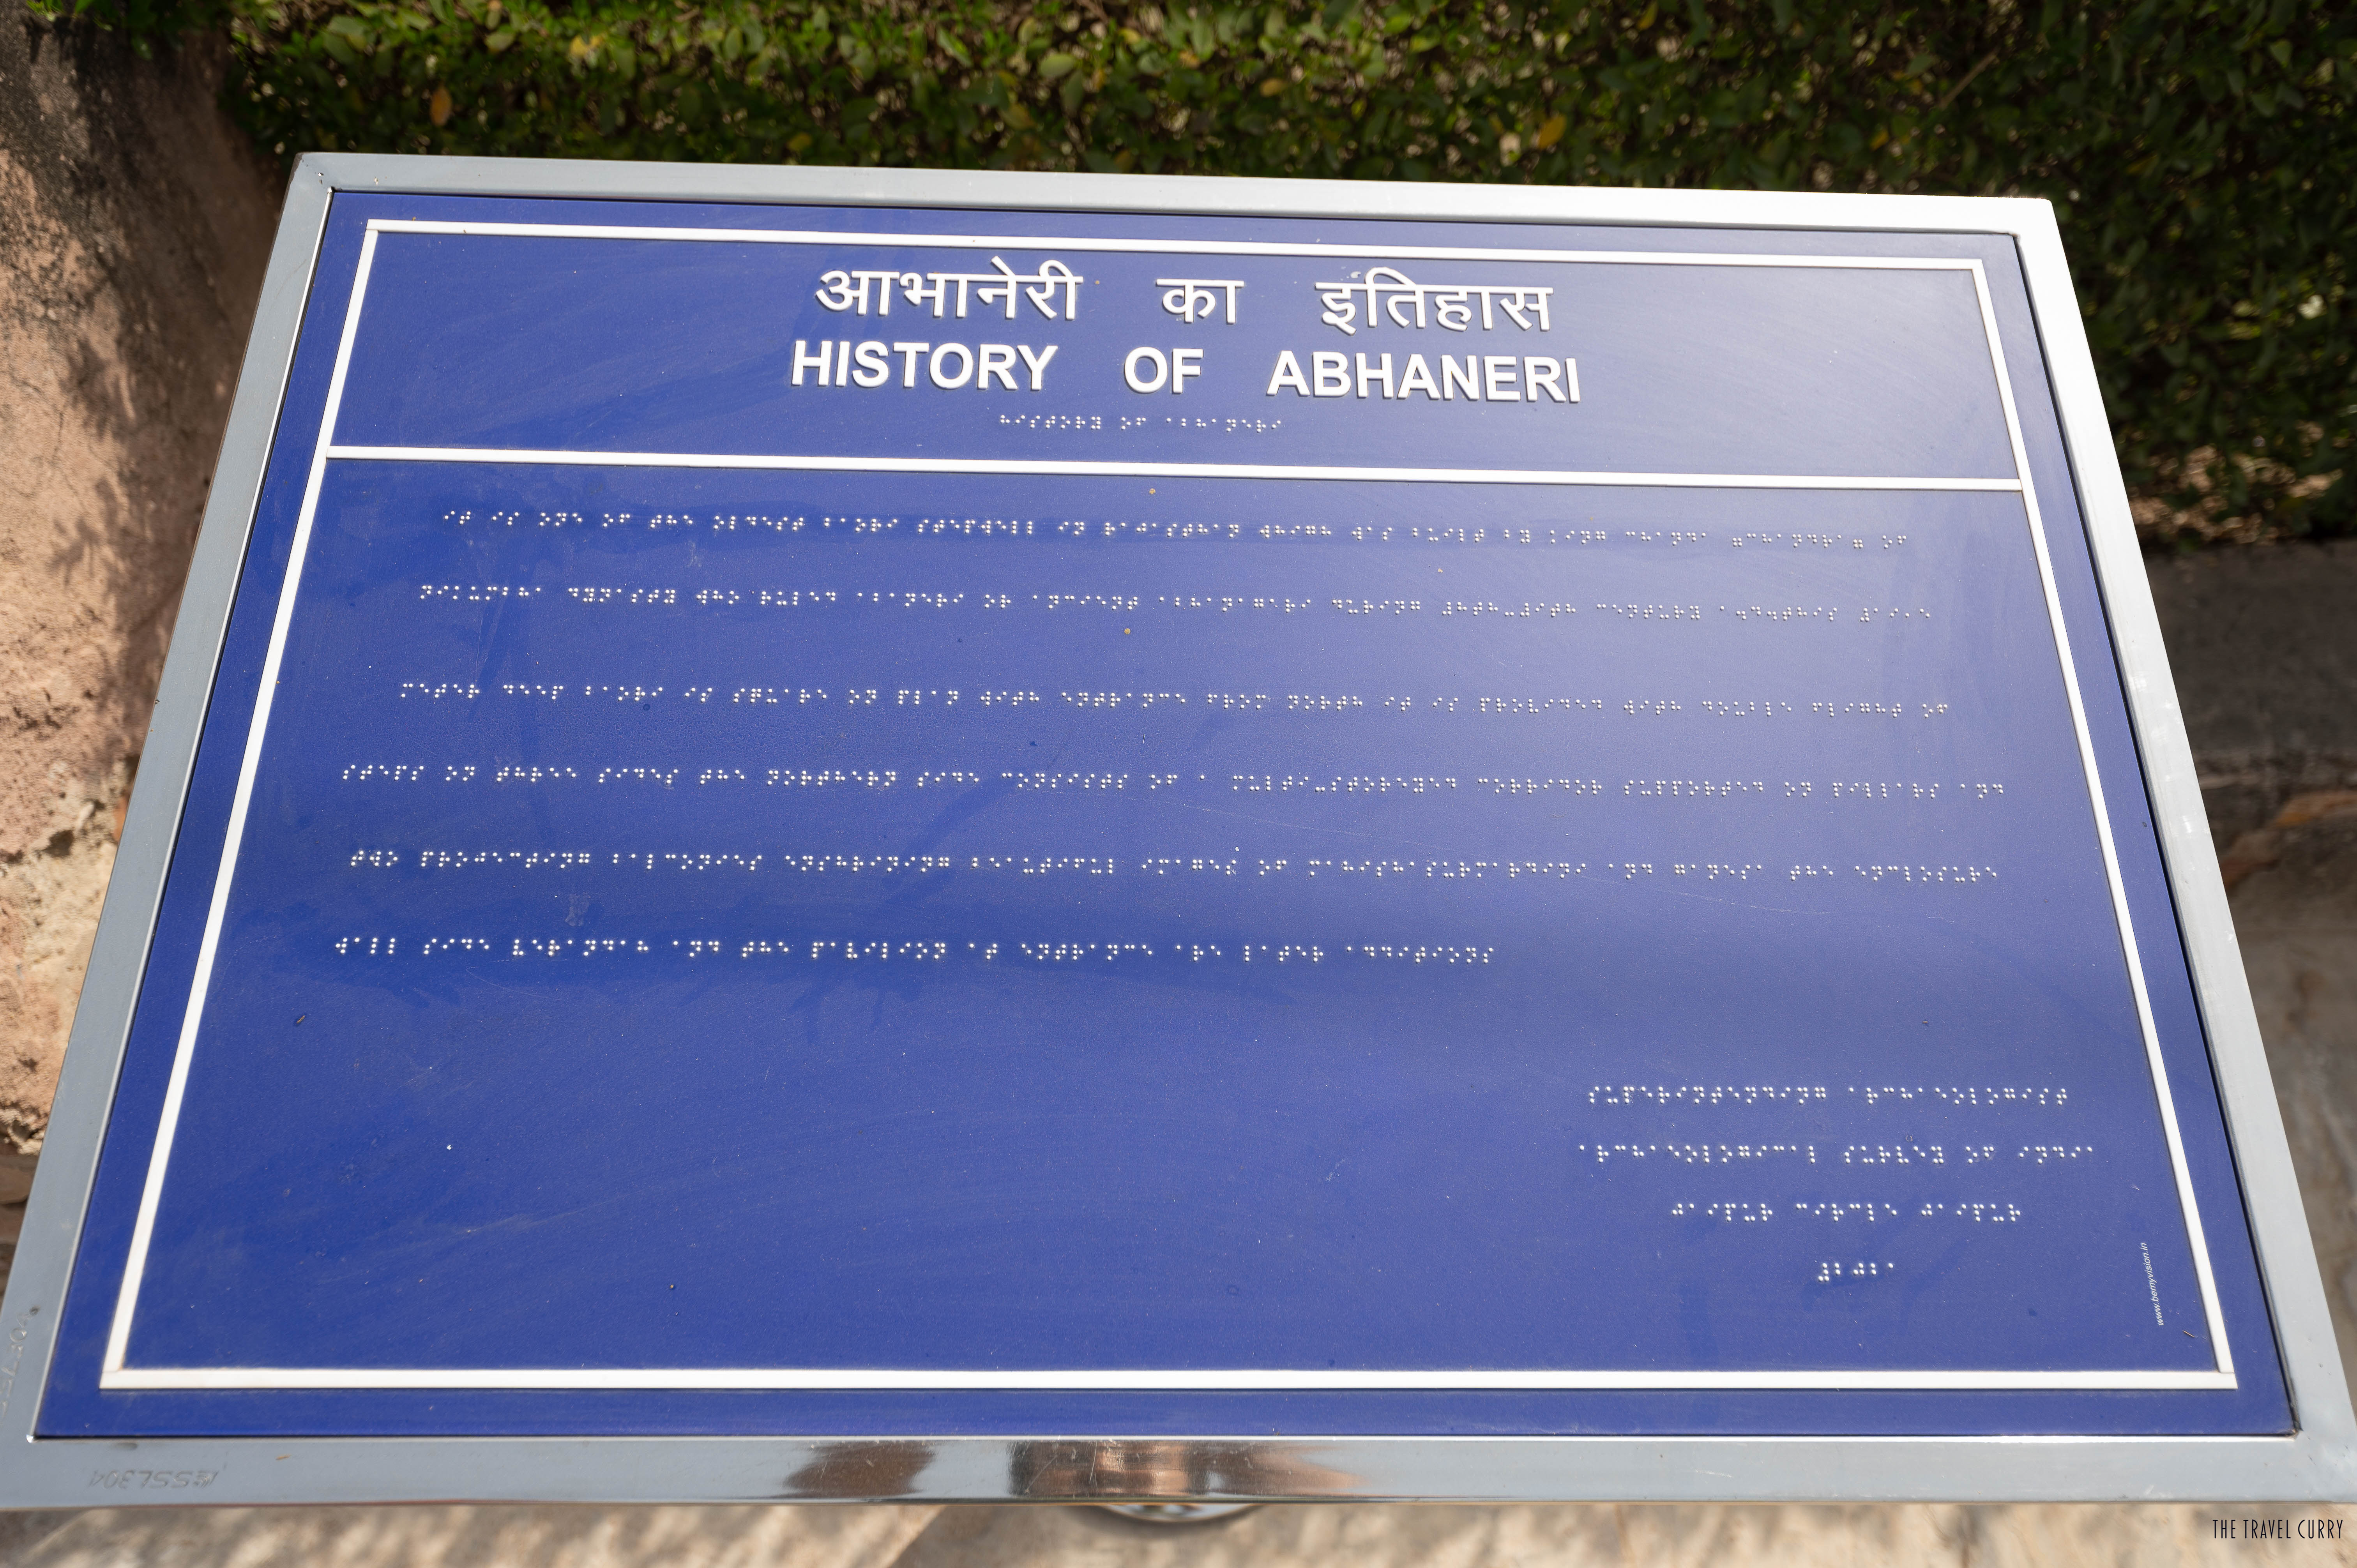 Braille script at Chand Baori's entrance